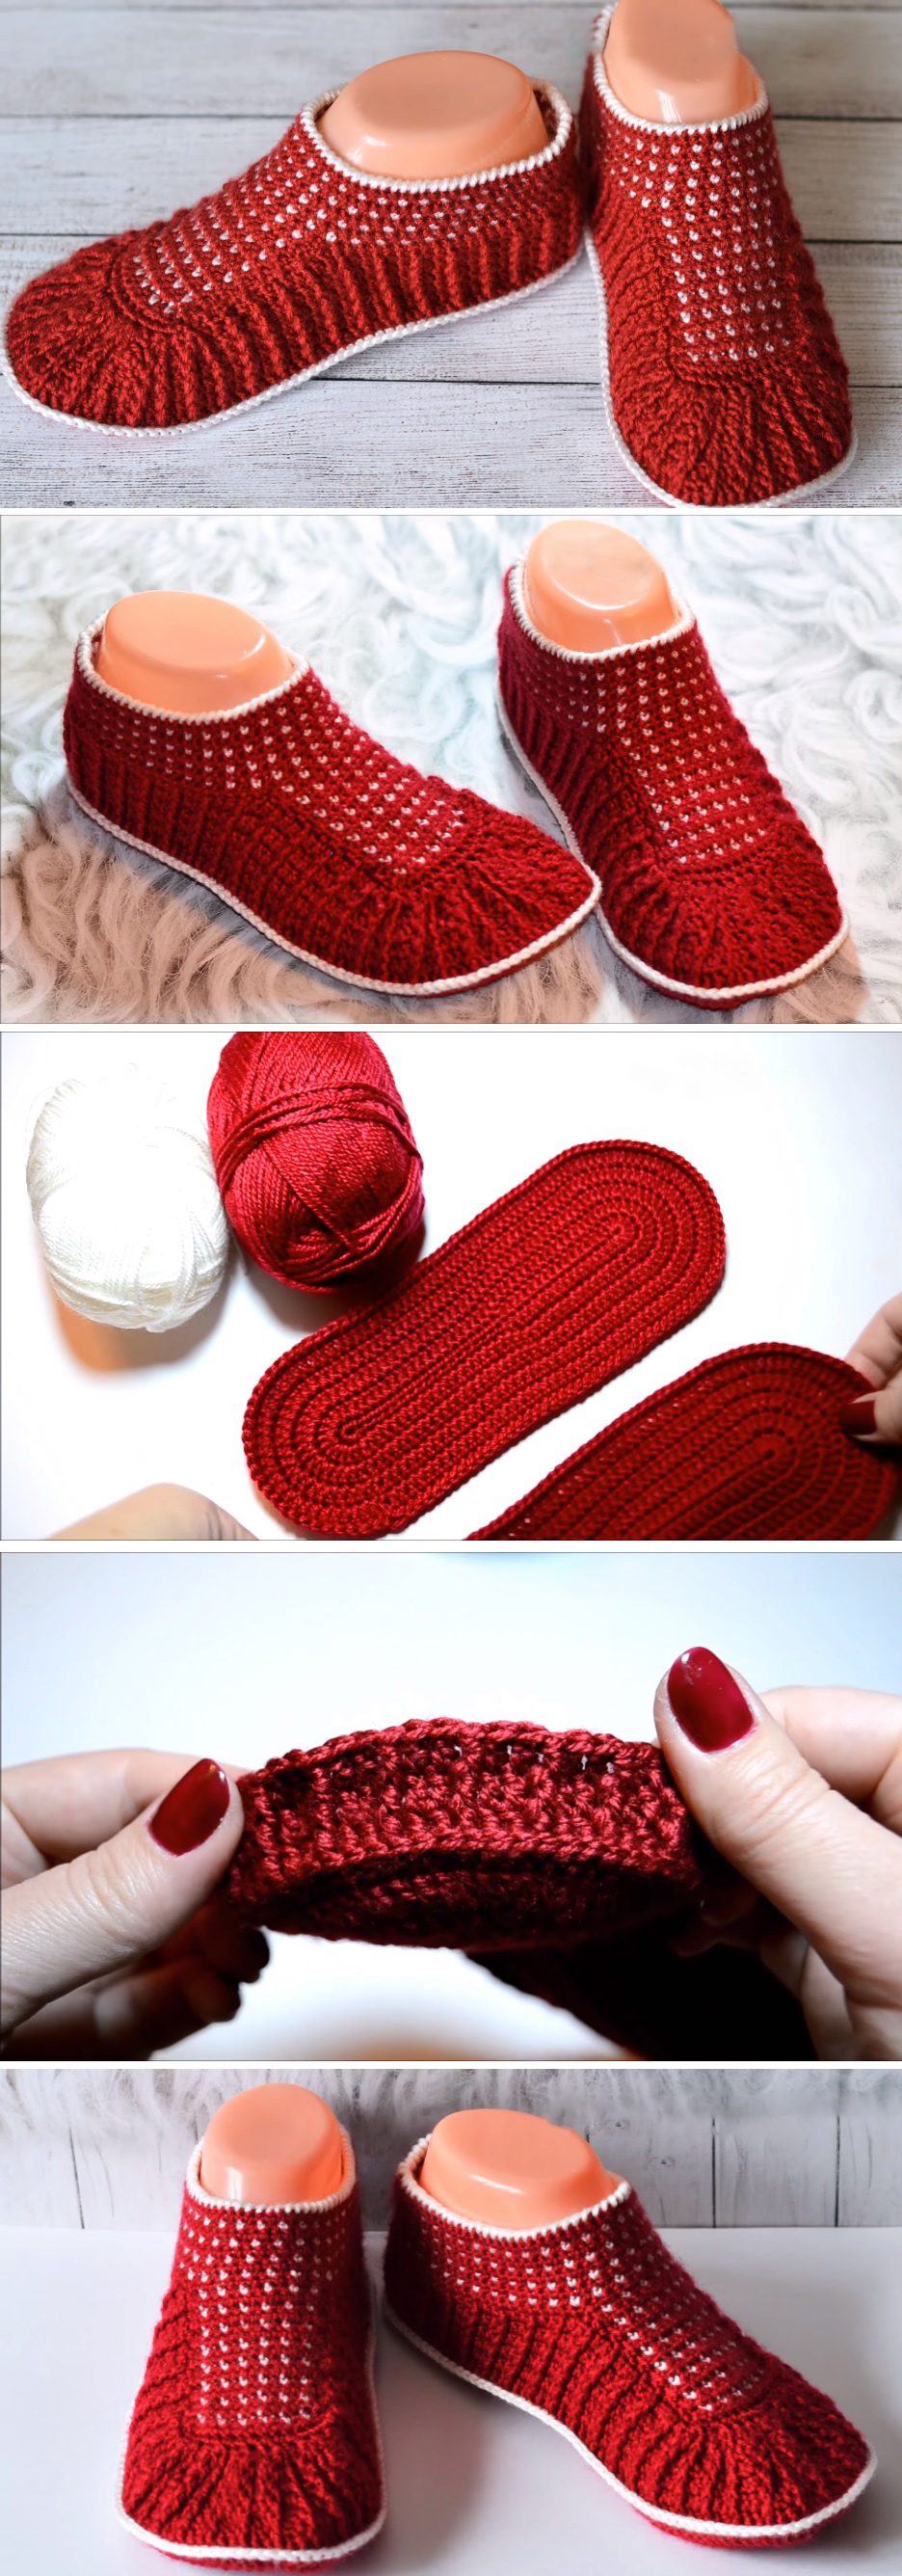 Crochet Slippers – Red is Always Elegant